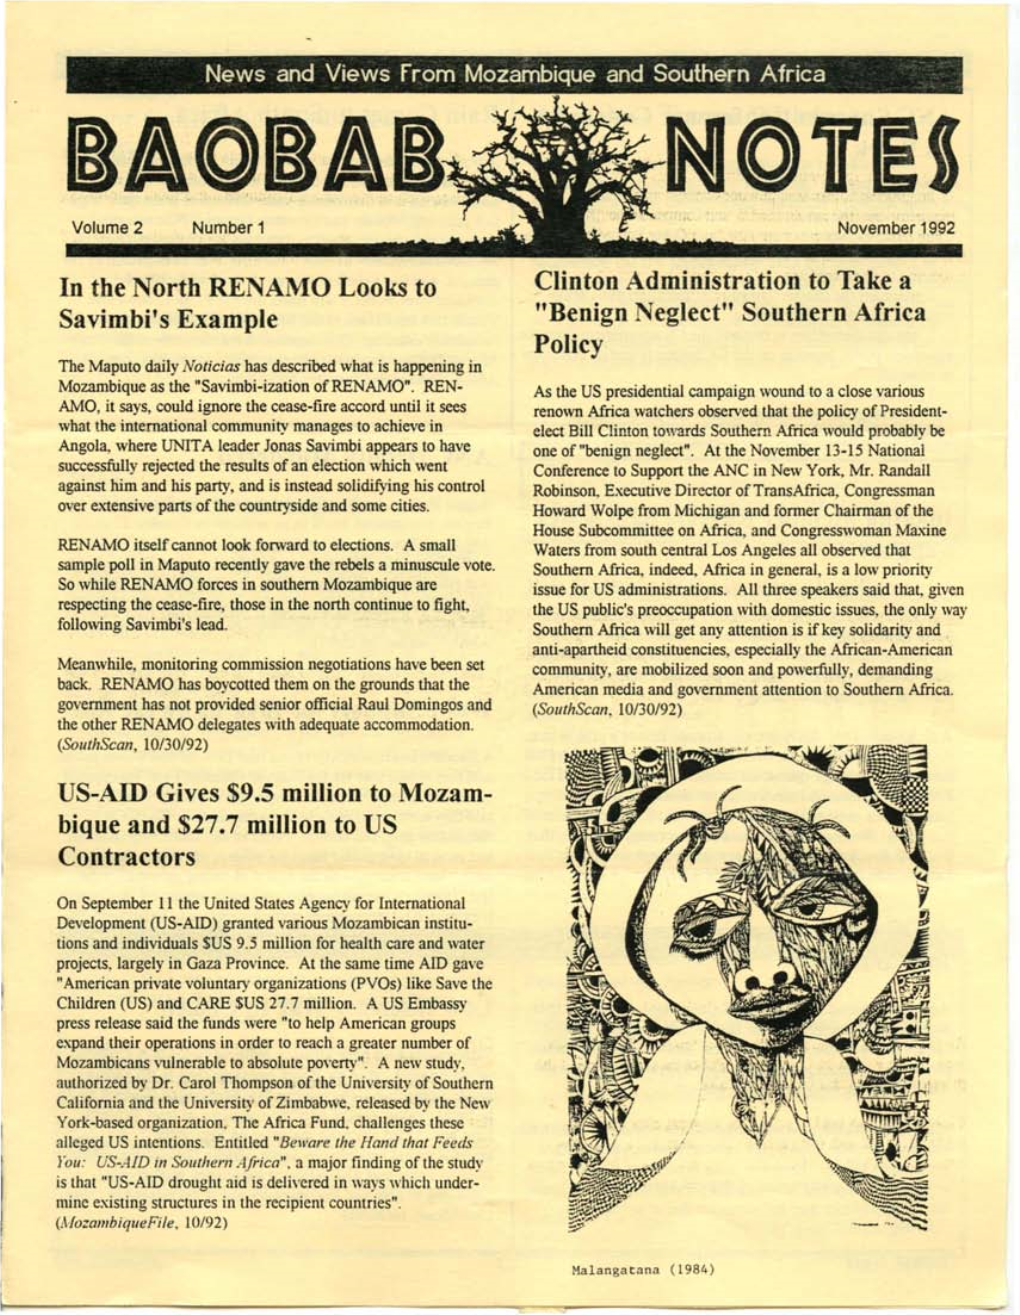 BAOBAB Volume 2 Number 1 November 1992